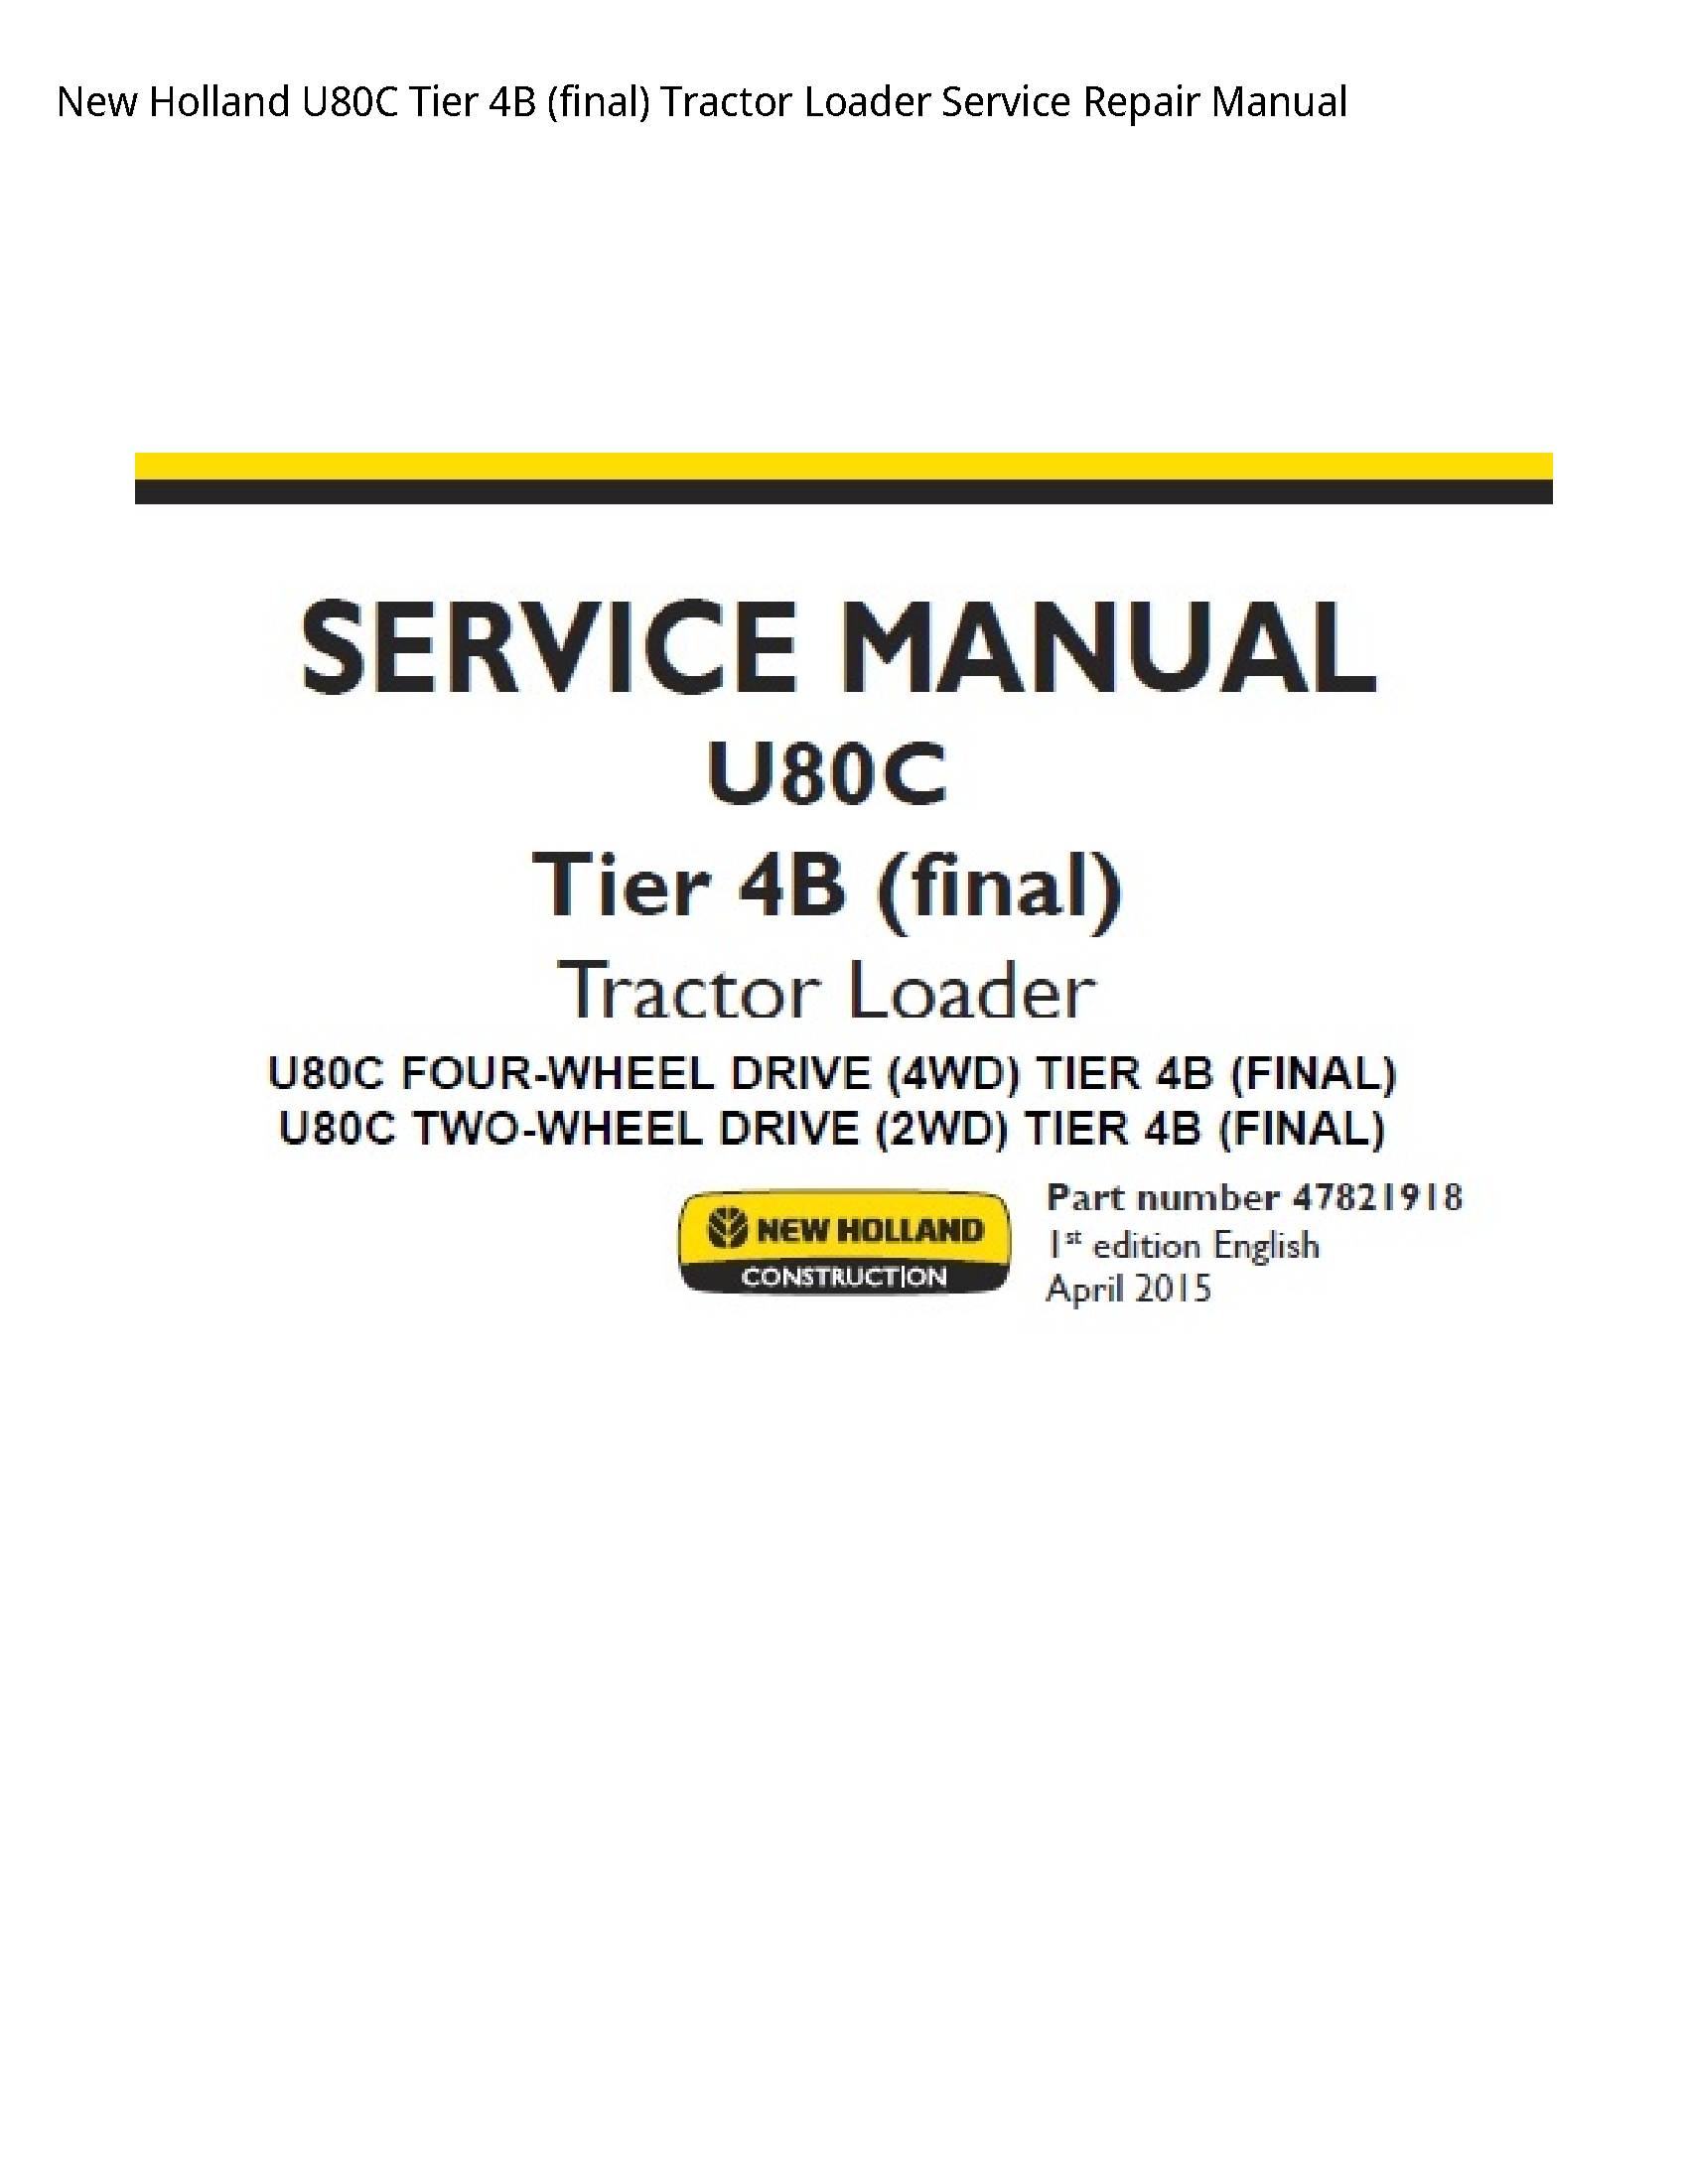 New Holland U80C Tier (final) Tractor Loader manual